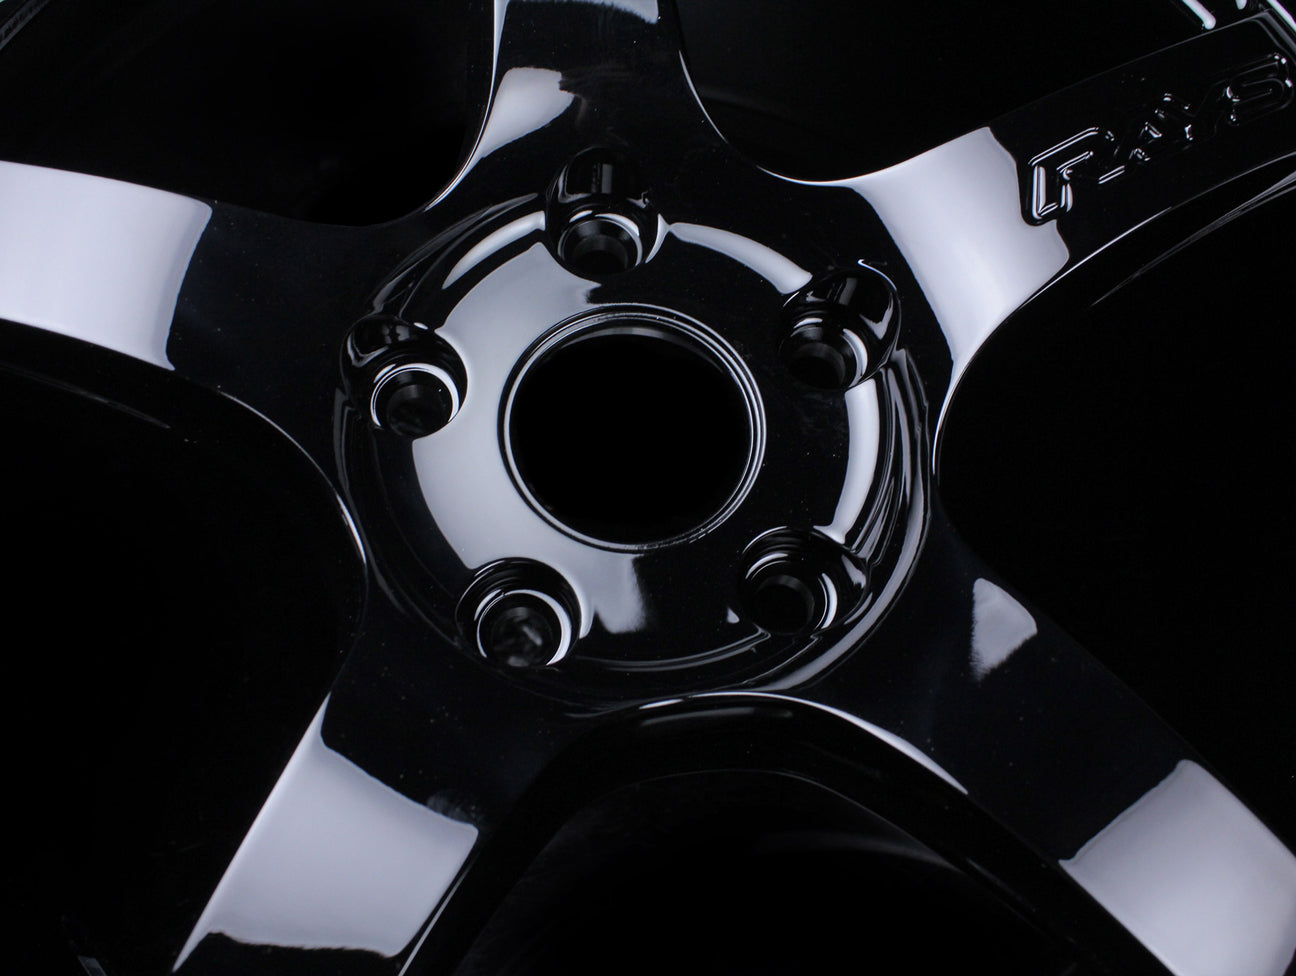 Rays Gram Lights 57CR Wheels - Gloss Black 17x9.0 / 5x114 / +38